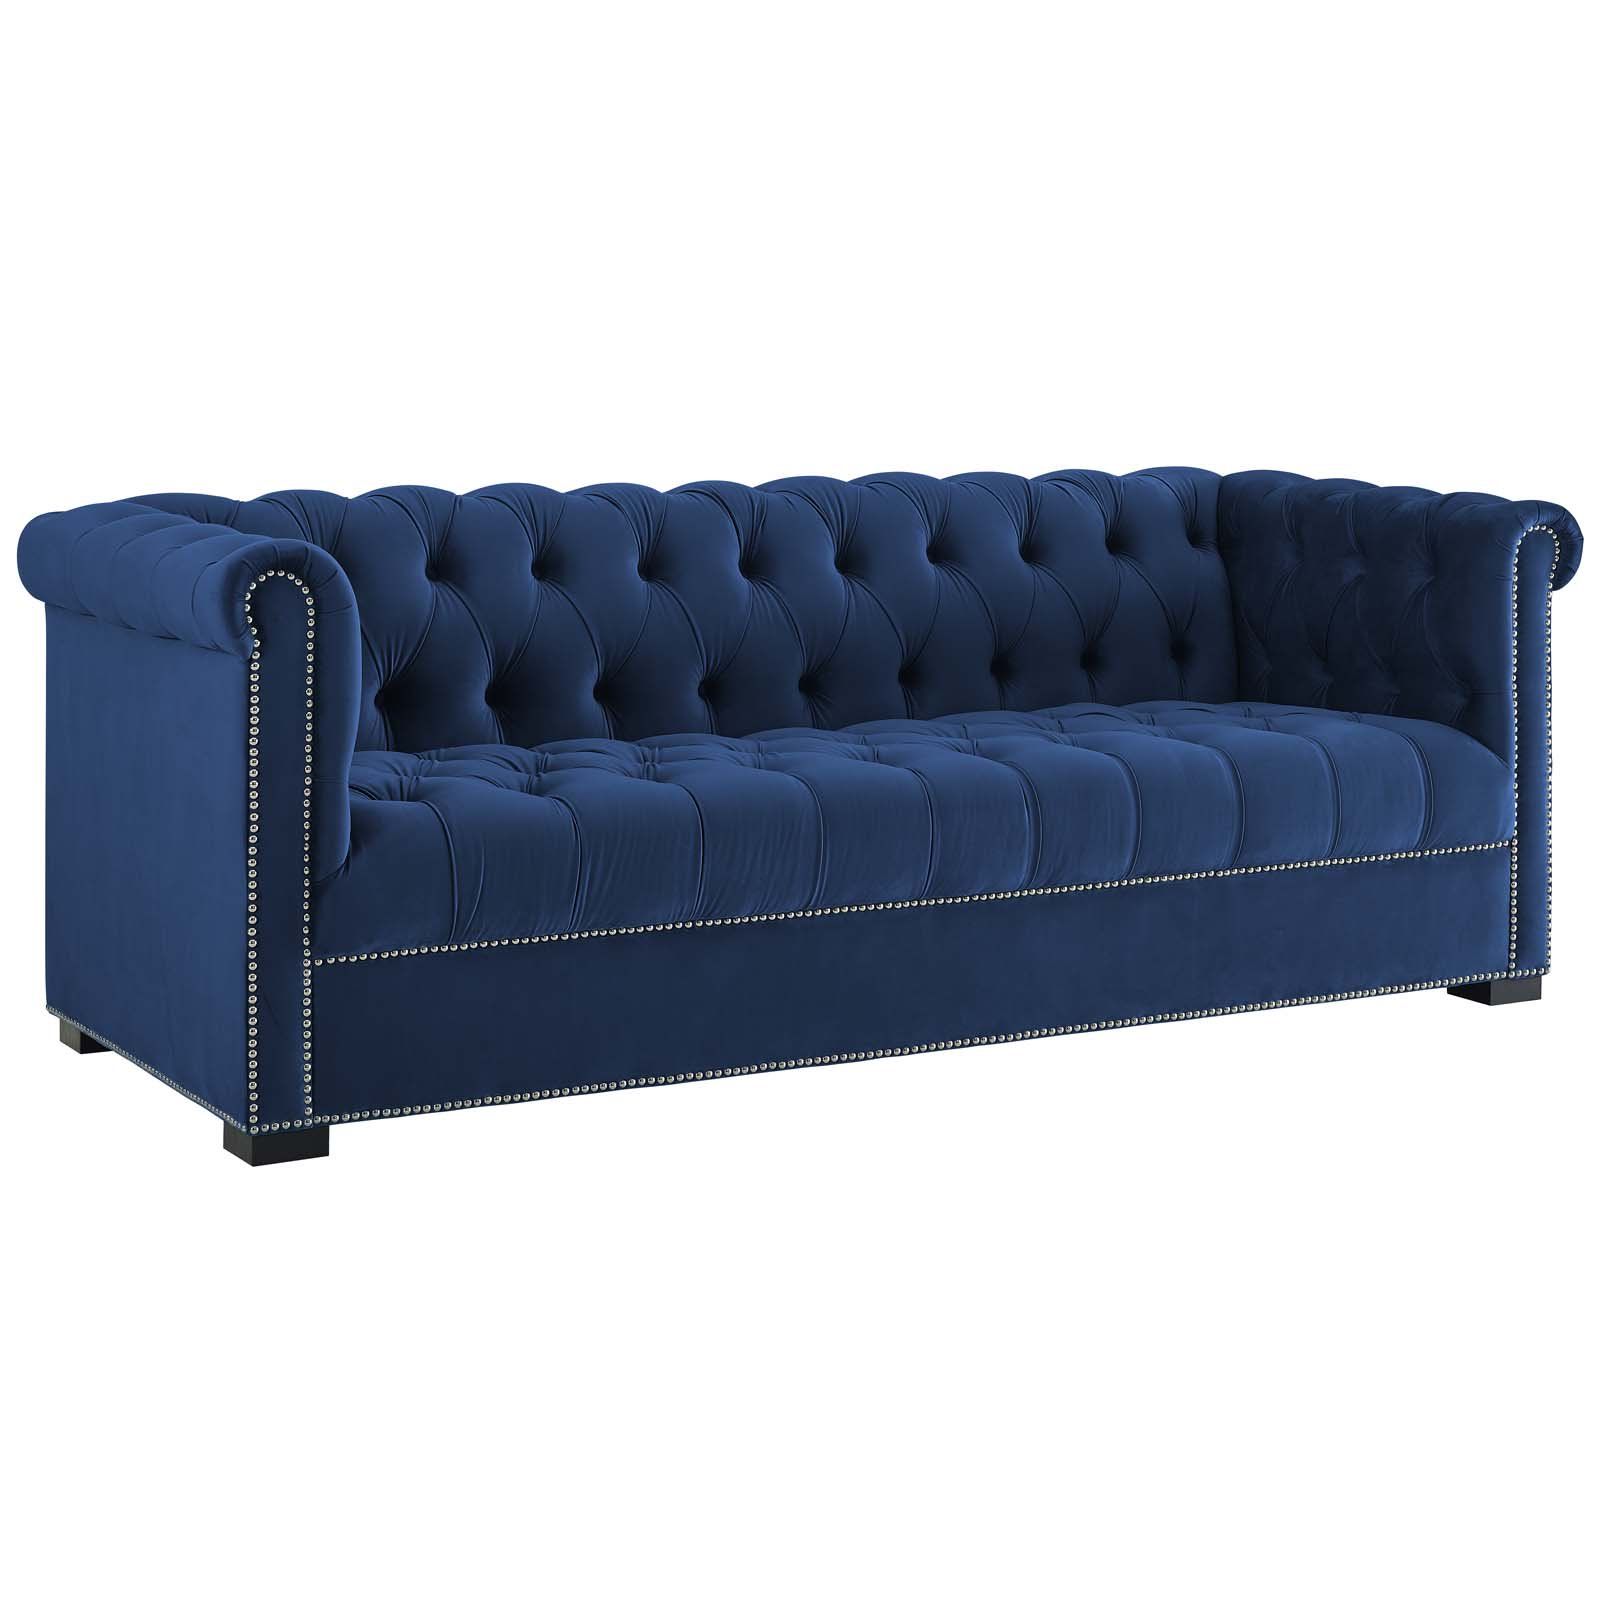 Modern Contemporary Urban Design Living Room Lounge Club Lobby Sofa, Velvet Fabric, Navy Blue | Walmart (US)